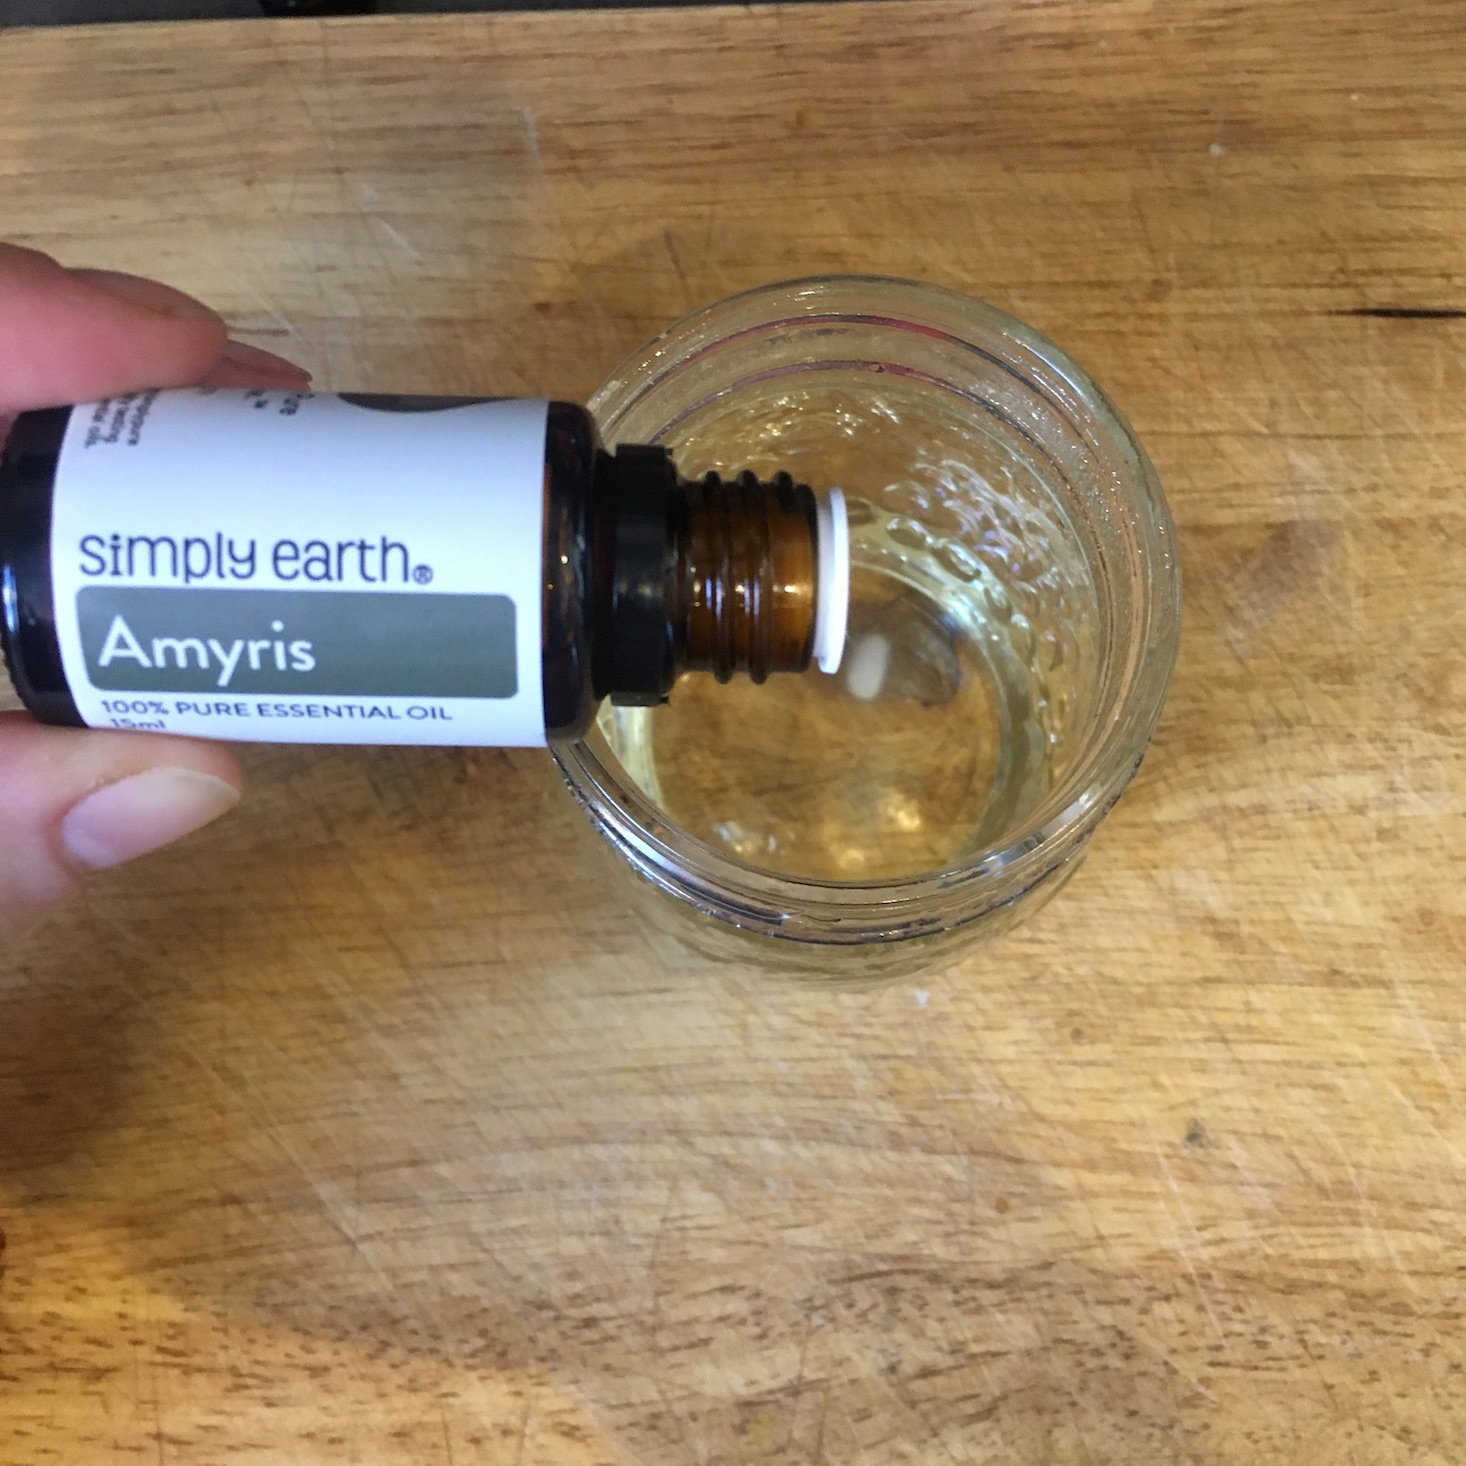 Adding Amyris essential oil to my wax blend.